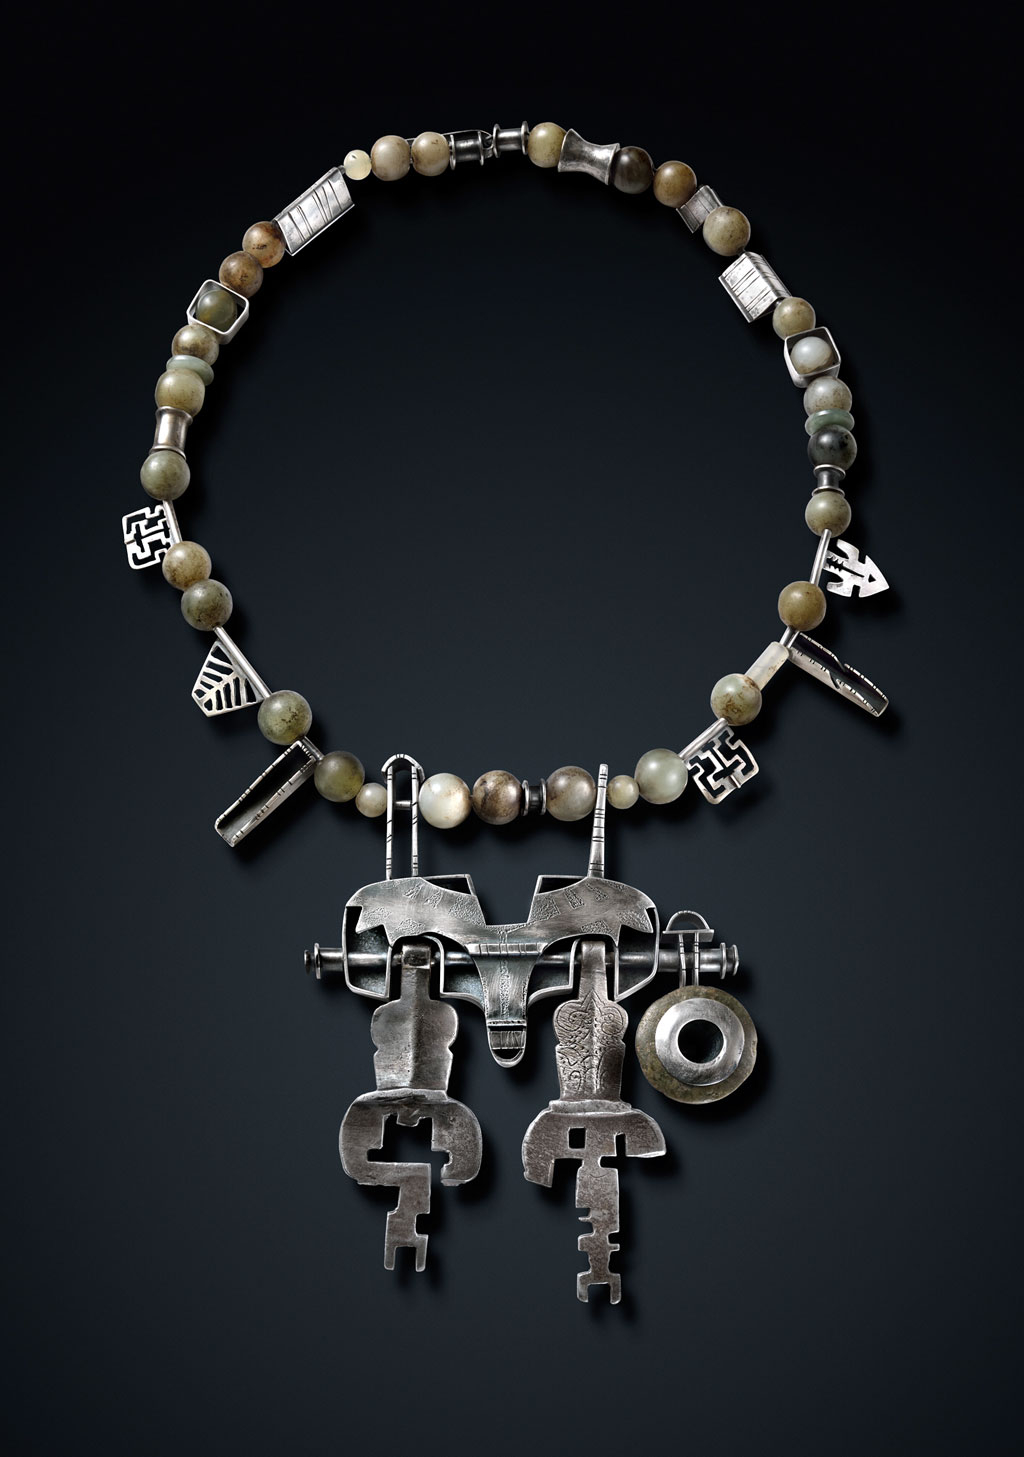 Ron Ho, Tibetan Reliquary, 2012. Fabricated and pieced silver, old Tibetan keys, jade ear plug, Chinese stone beads